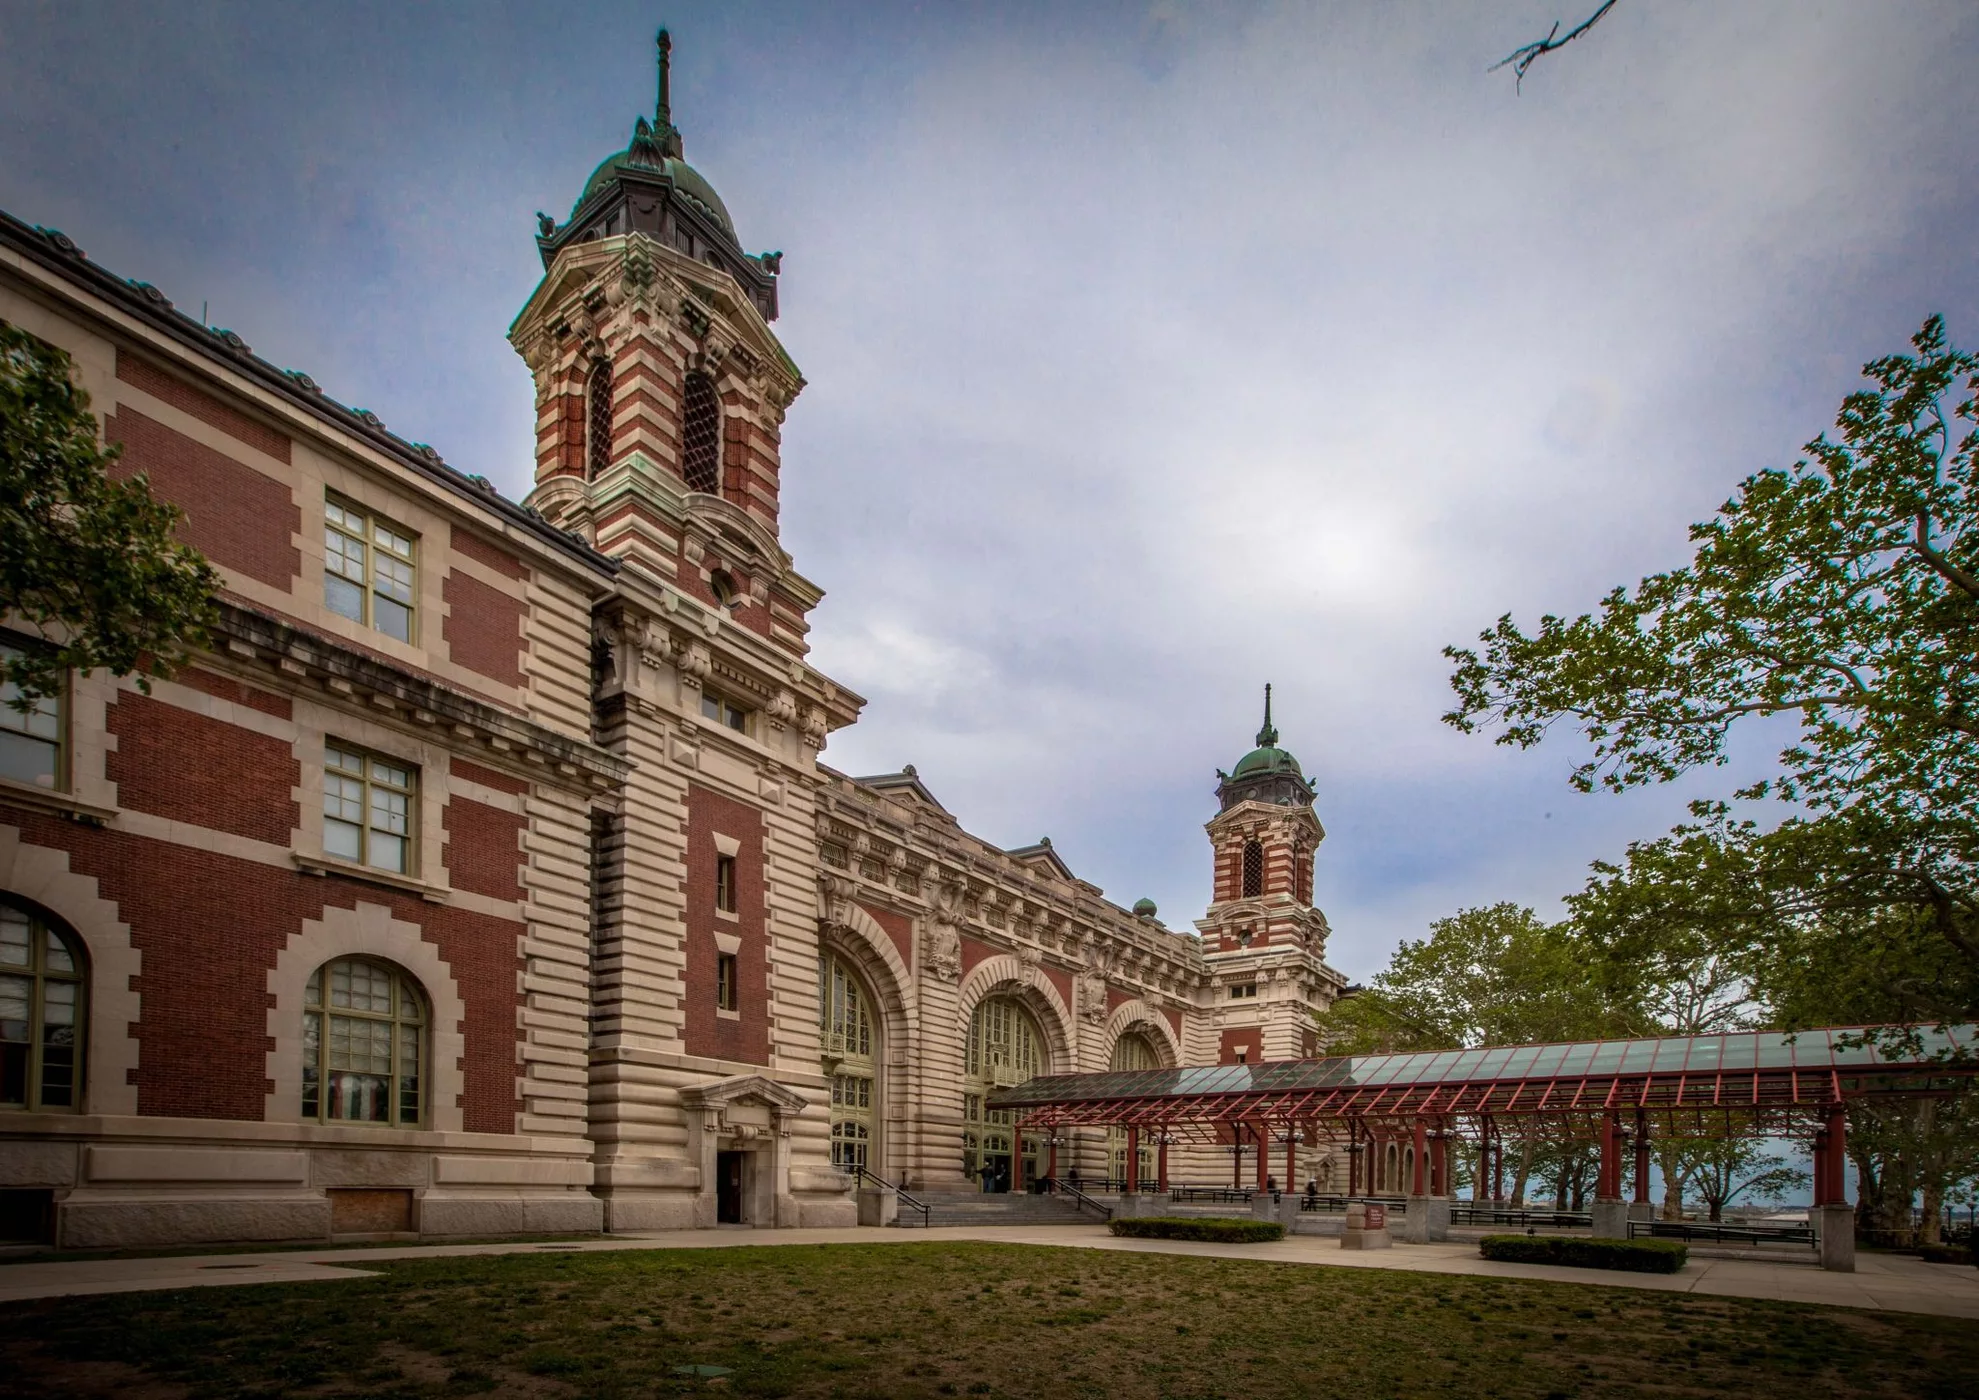 Ellis Island Immigration Station New York, USA